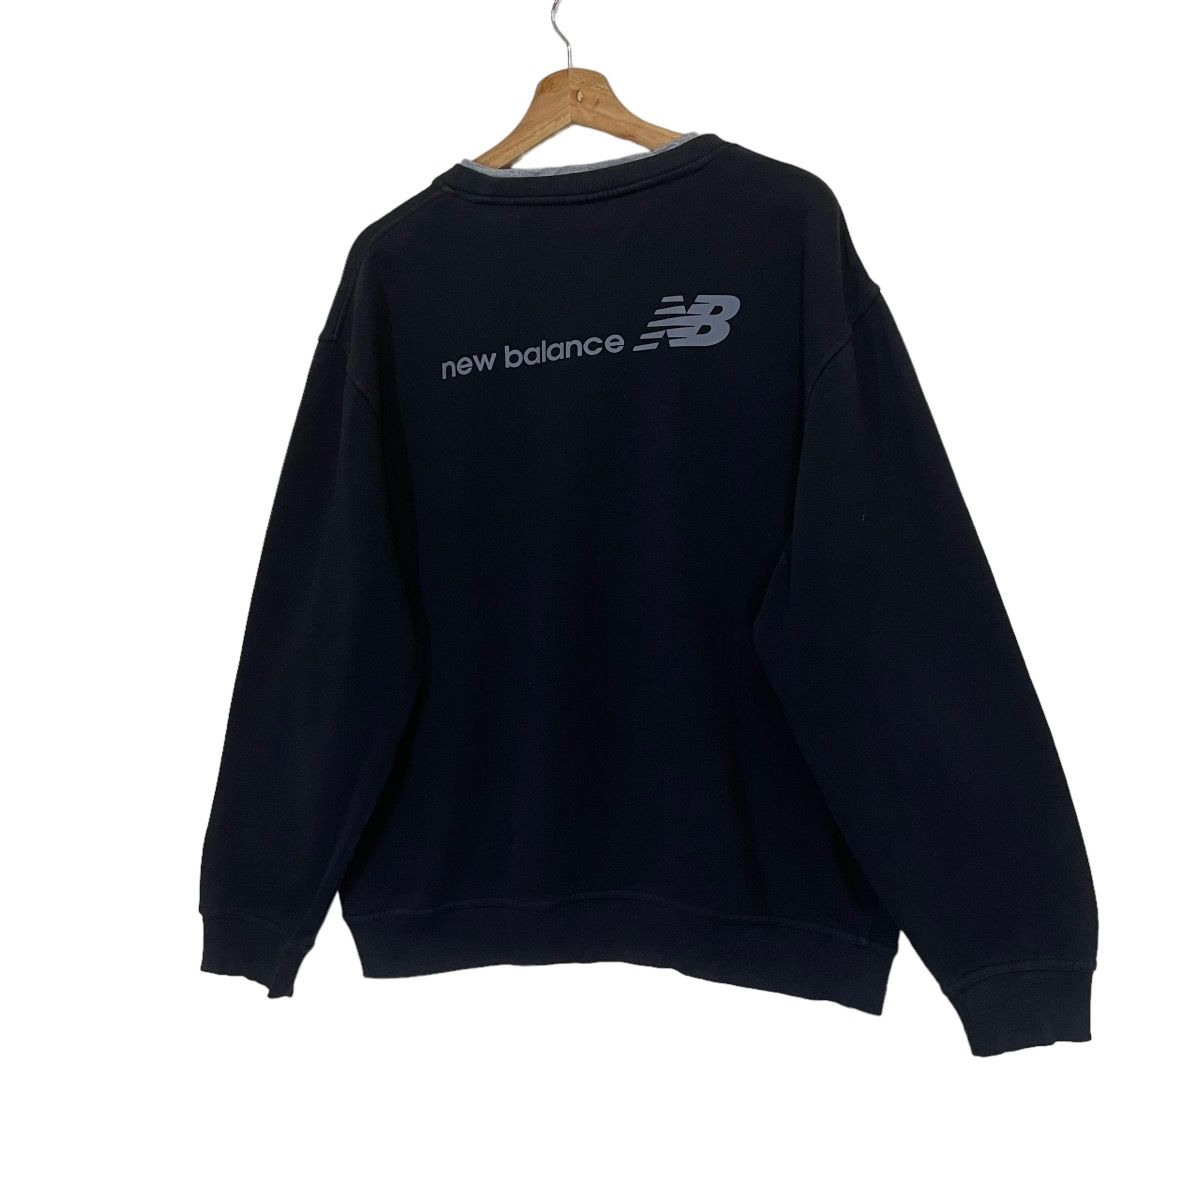 Vintage New Balance Crewneck Sweatshirt Size XL - 3